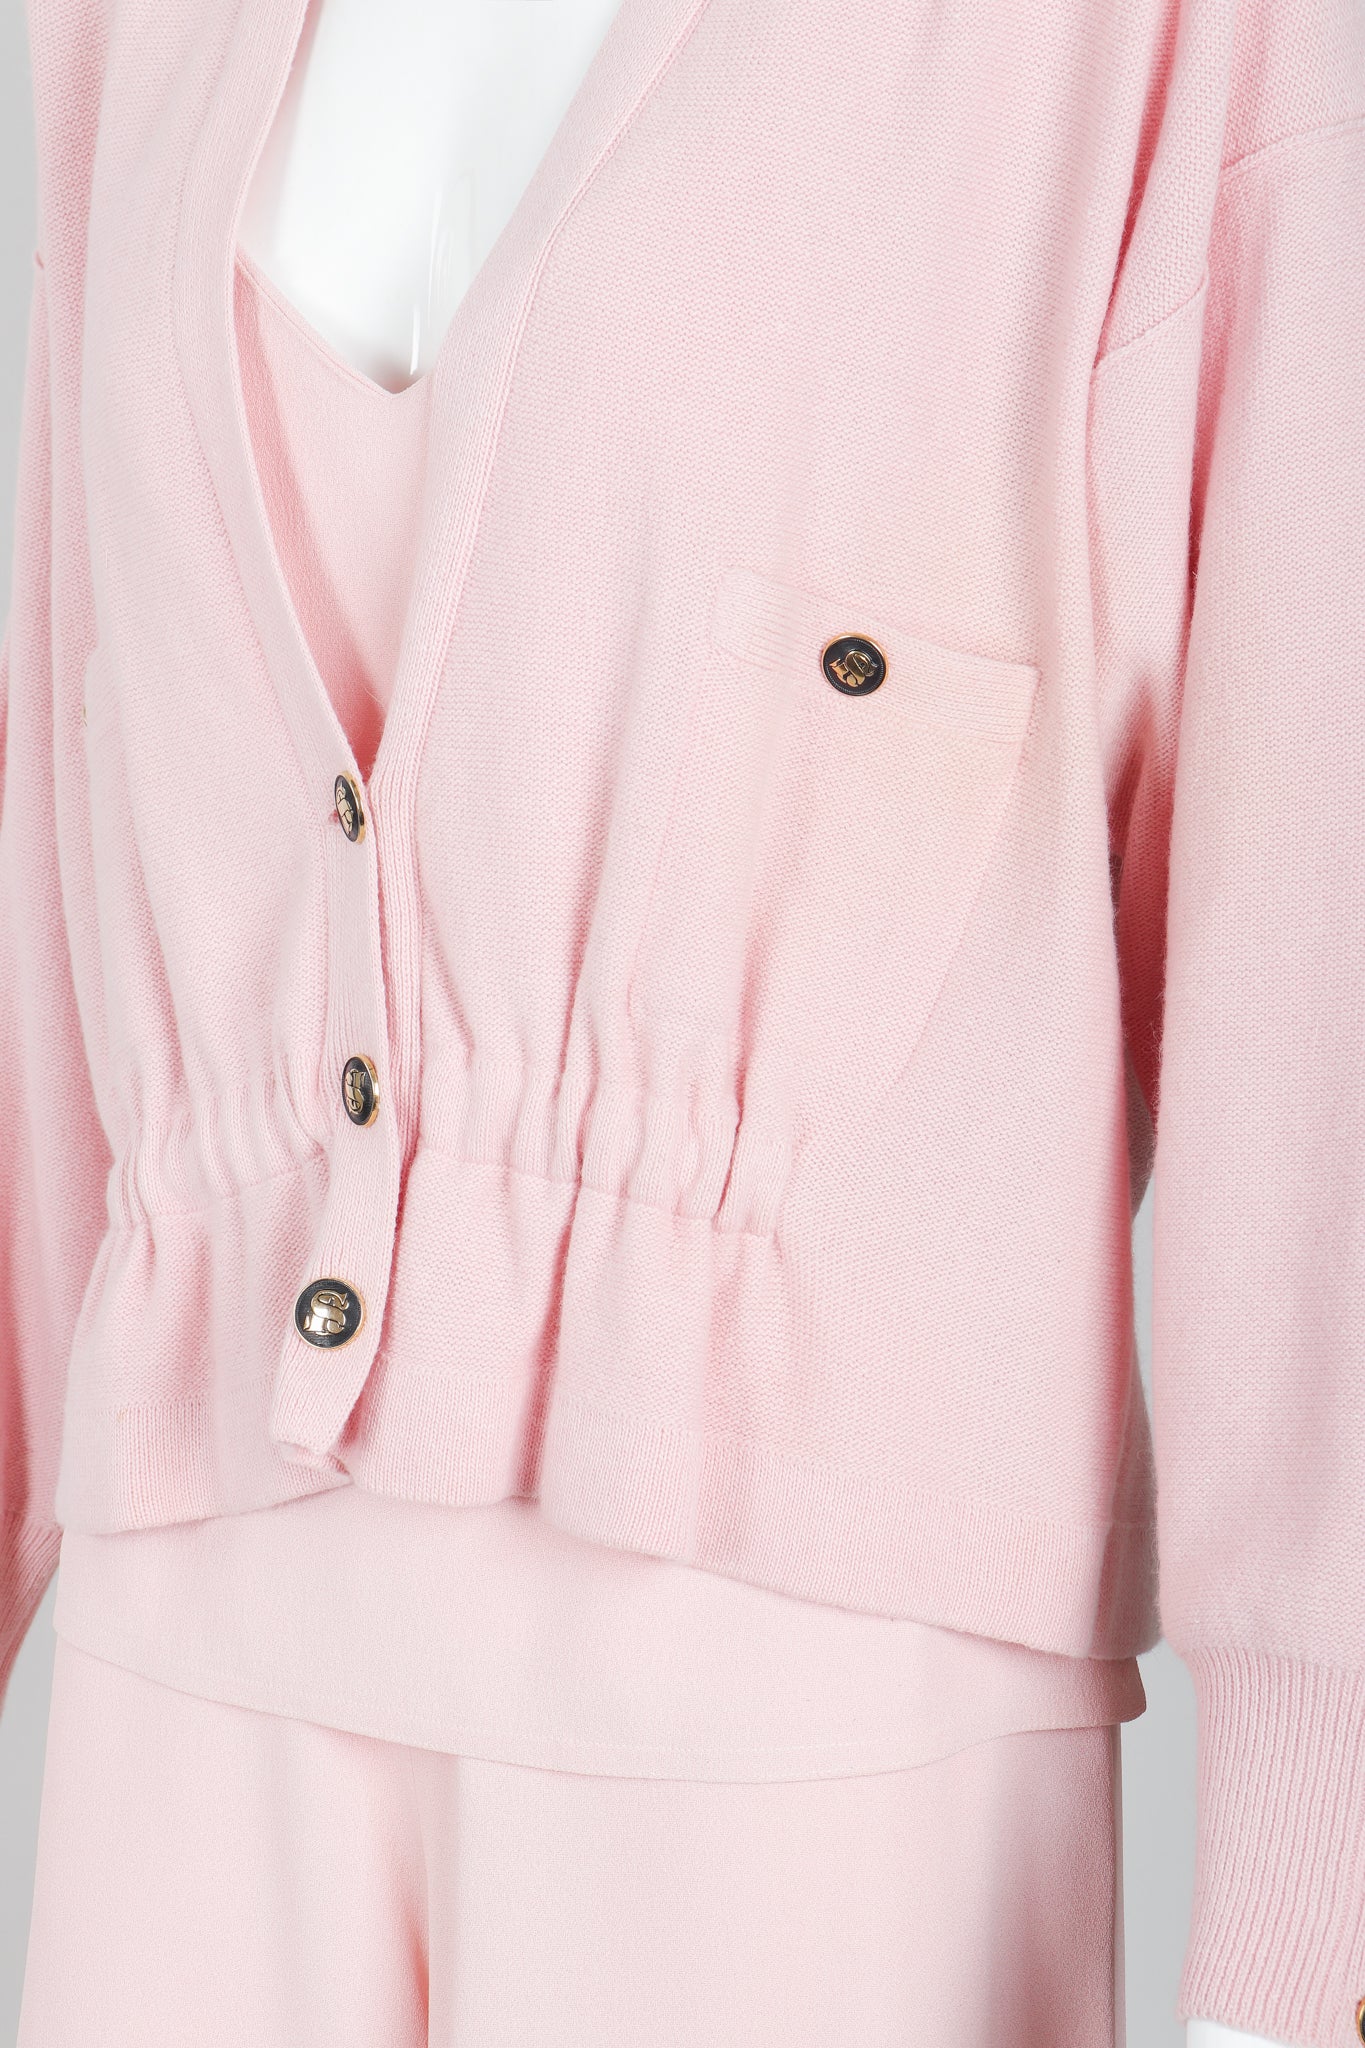 Vintage Sonia Rykiel Baby Pink Camisole Short & Sweater Ensemble on Mannequin crop detail